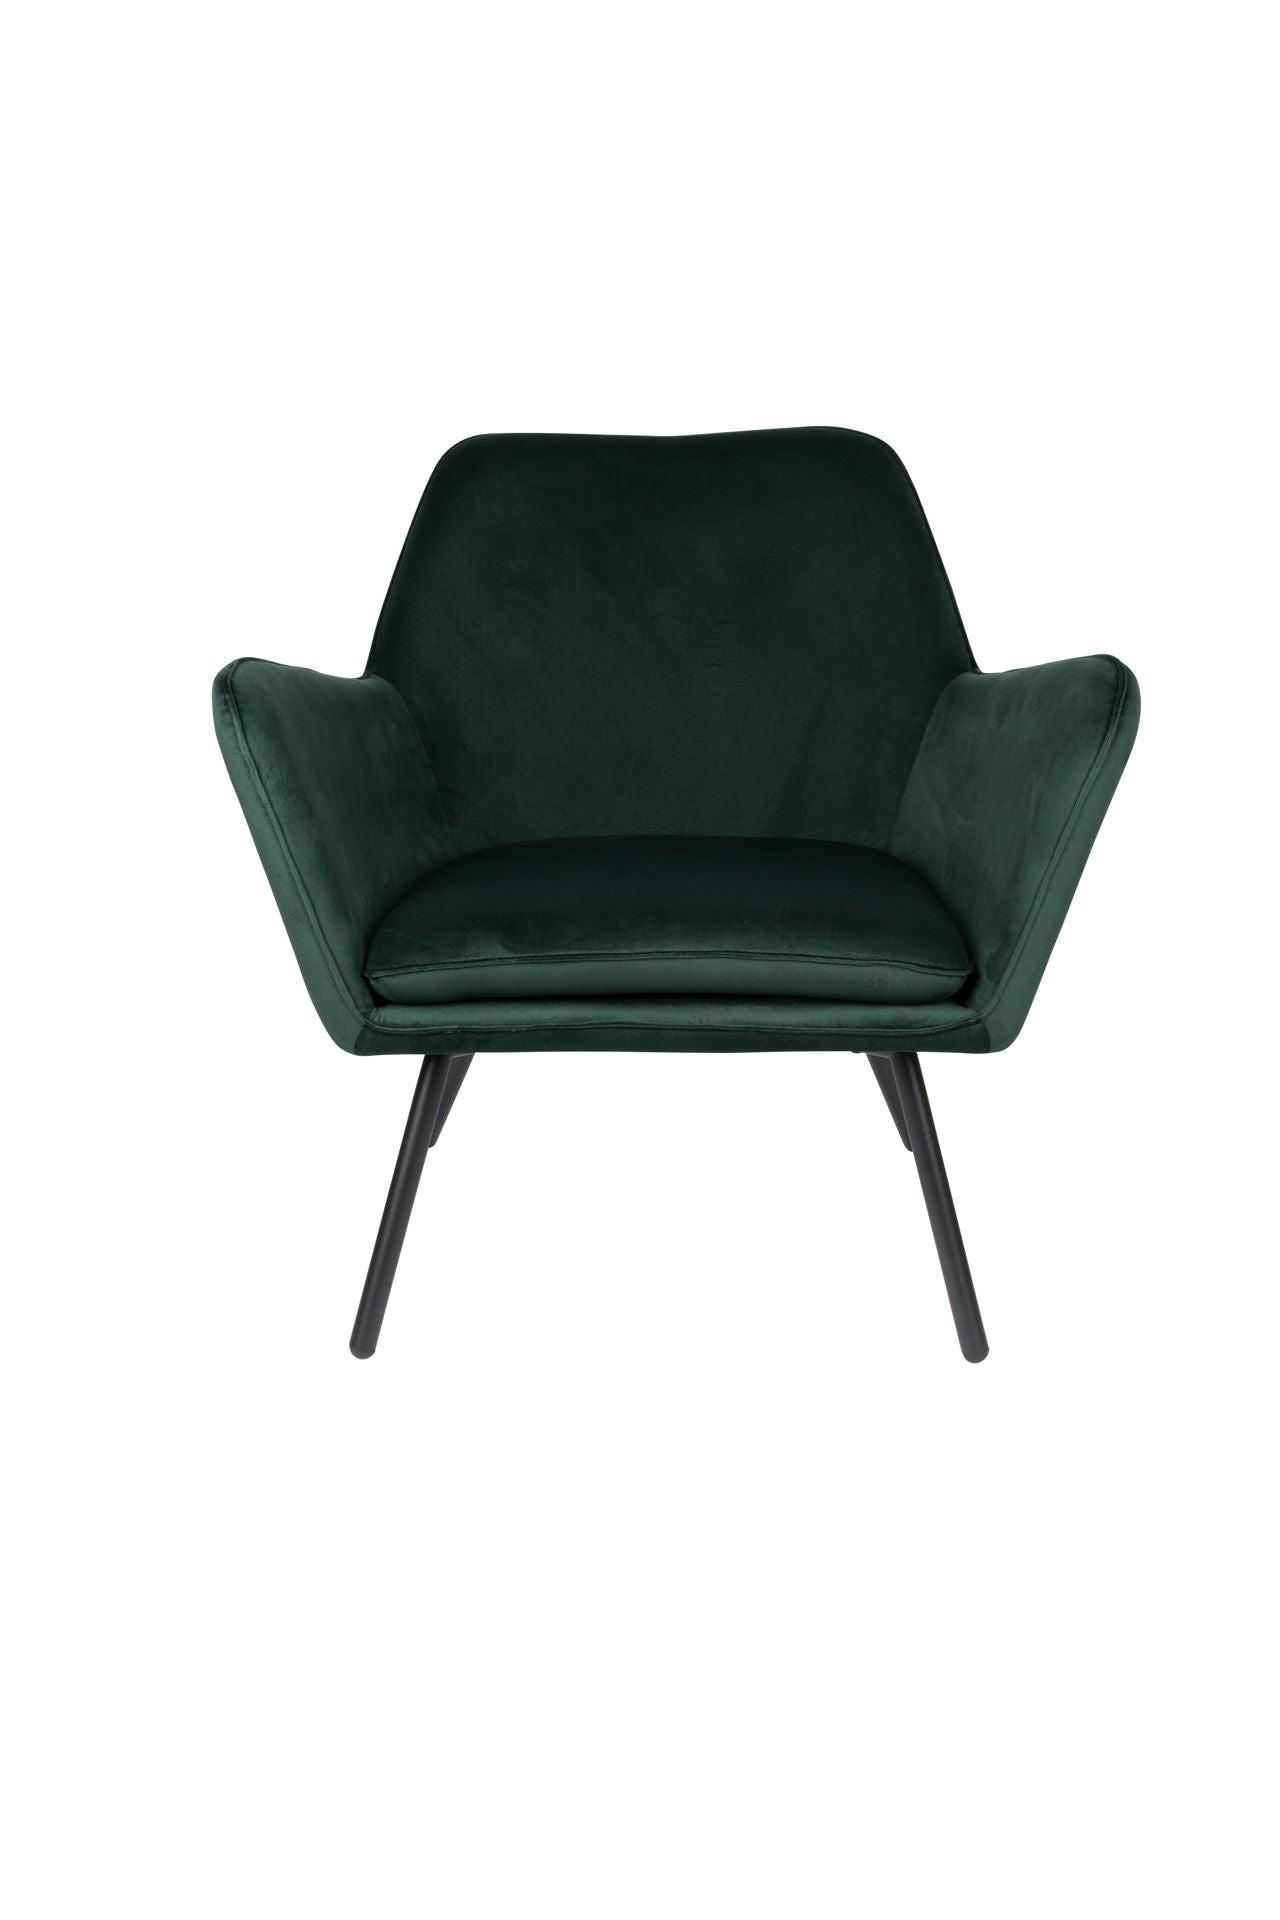 Nancy's Naranja Lounge Chair - Industrial - Green - Velvet, Iron, Plywood - 76 cm x 80 cm x 78 cm